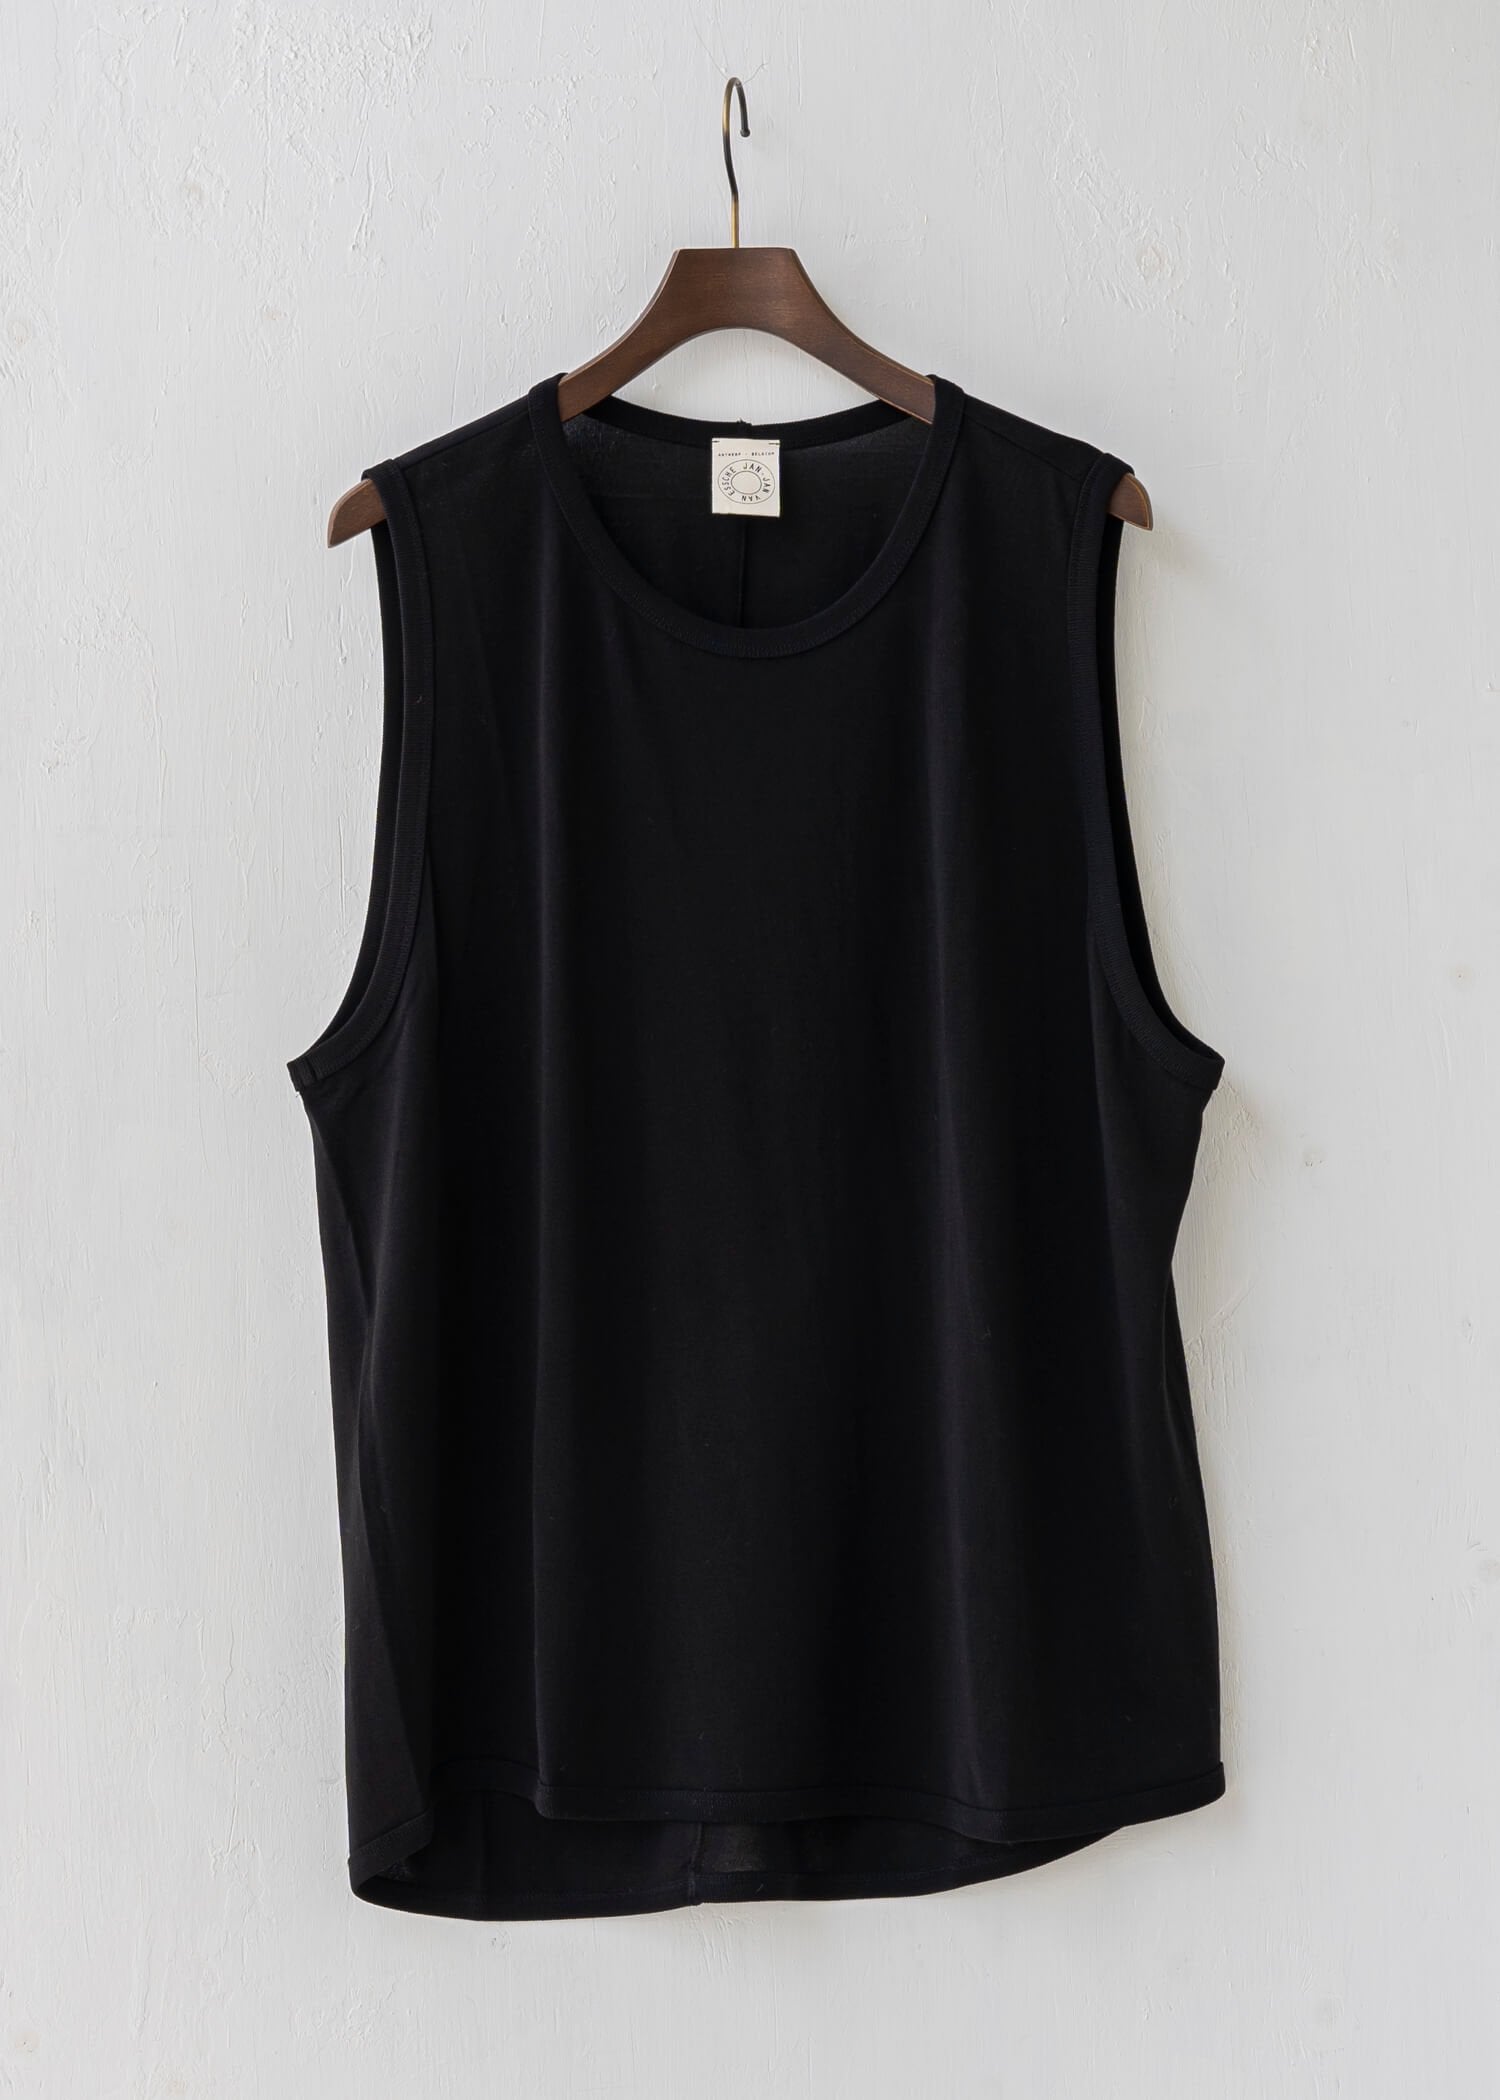 JAN-JAN VAN ESSCHE / "TANKTOP#16" 黑色和棉/棉质针织衫